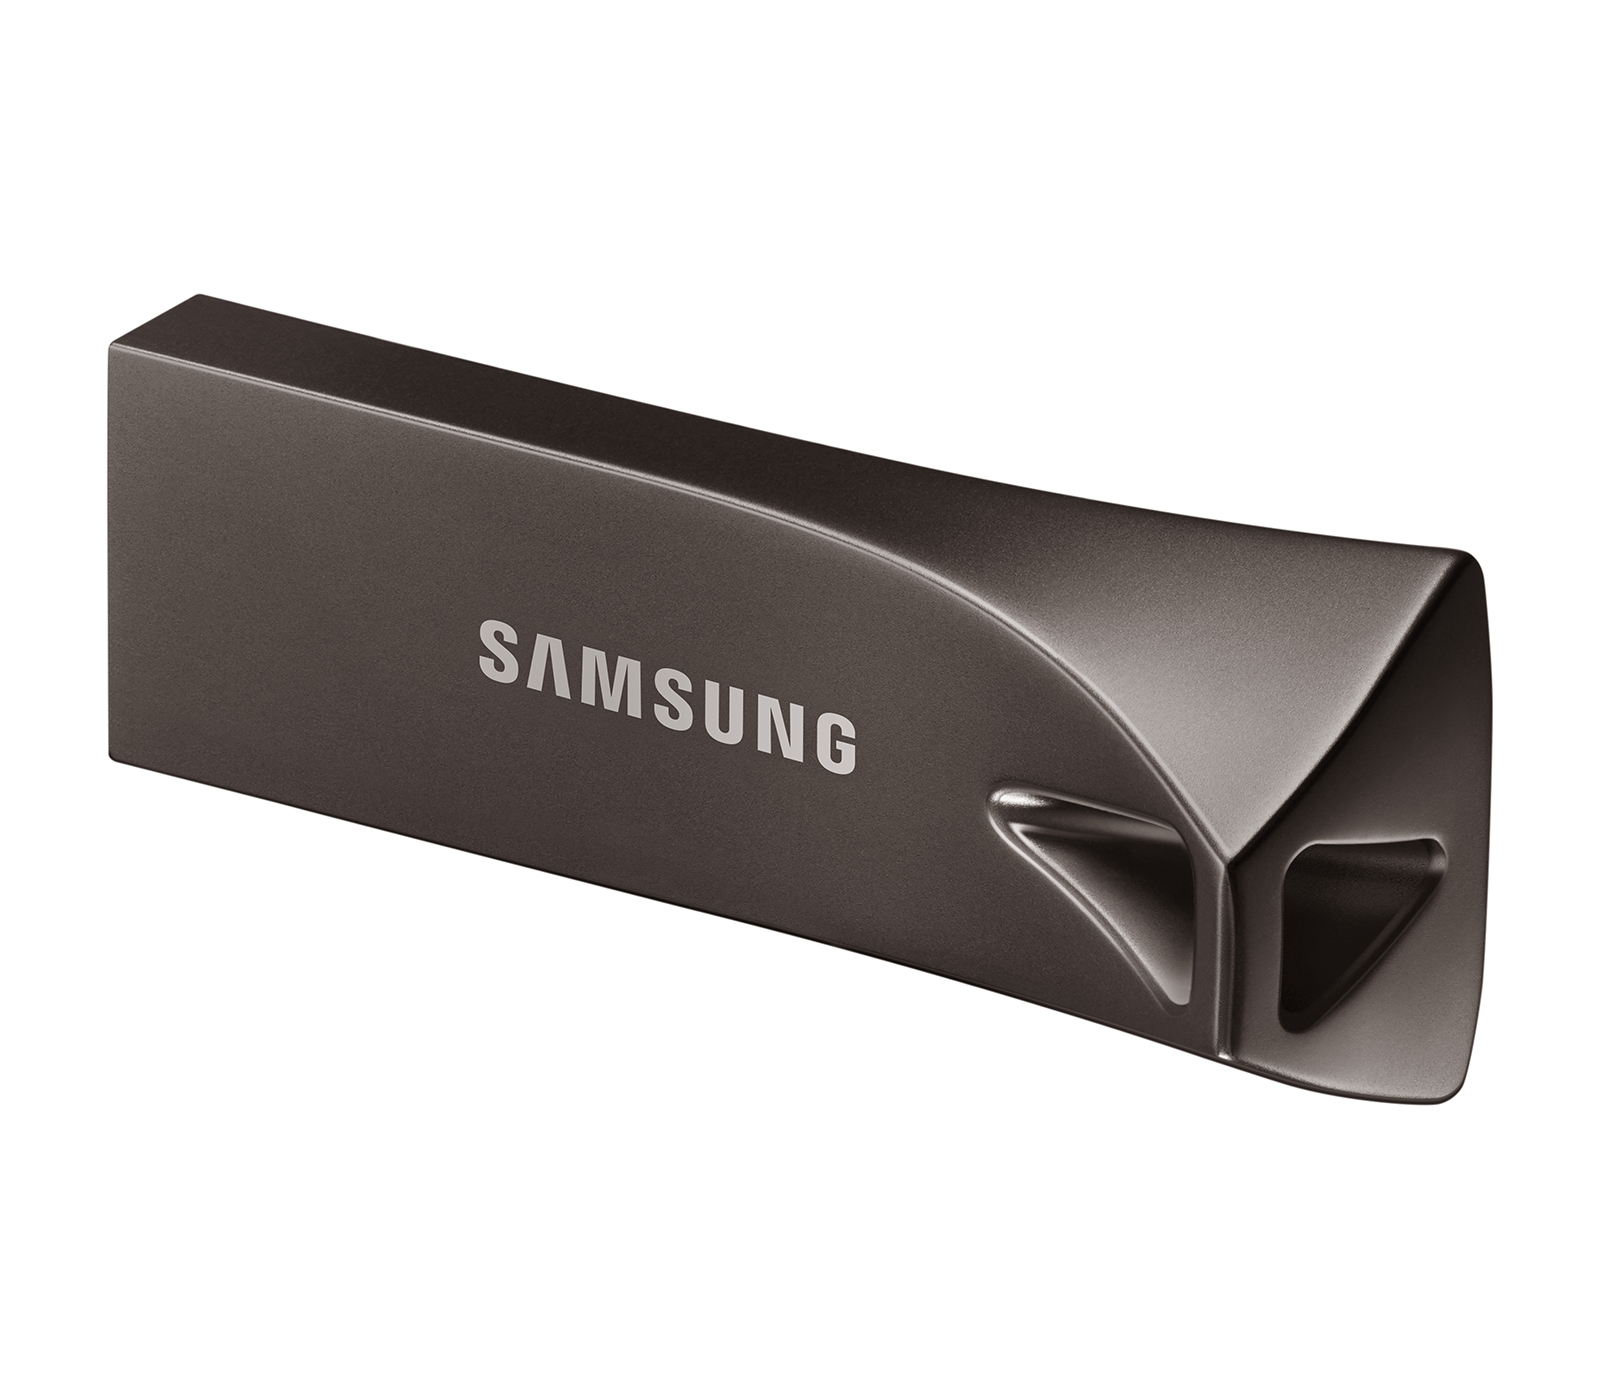 USB 3.1 Flash Drive BAR Plus 256GB Titan Gray Memory & Storage - MUF-256BE4/AM | Samsung US